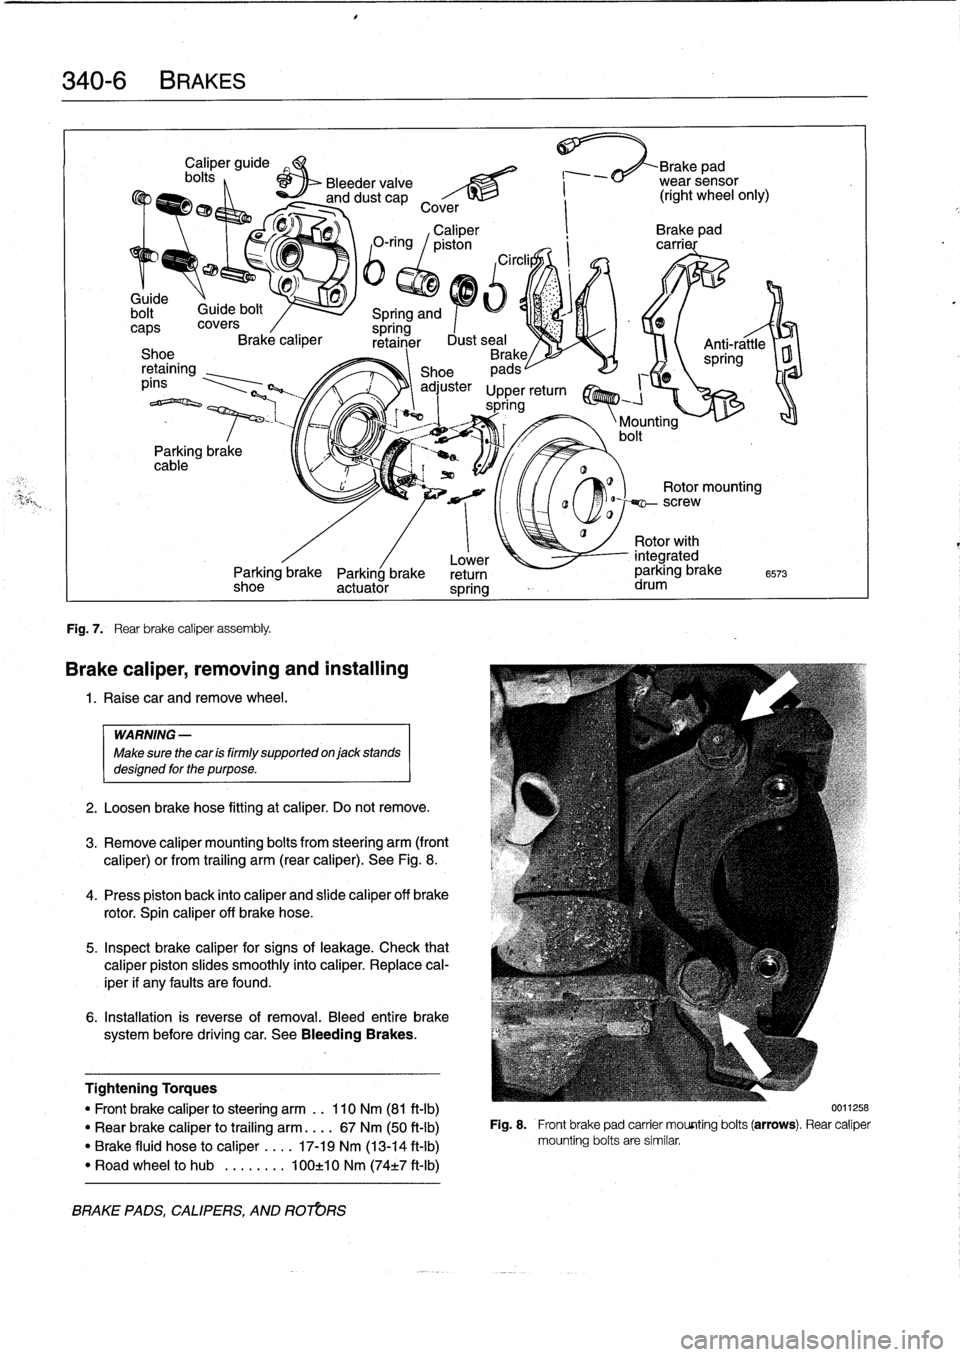 BMW 328i 1997 E36 Owners Manual 
340-
6BRAKES

bolt~

	

Guide
bolt

caps
covers
Brake
caliper
Shoe
retaining
píns

Parking
brake
cable

Fig
.
7
.

	

Rear
brake
caliper
assembly
.

Caliper
guide

	

Brake

	

ad
bolts
,

	

Bleede